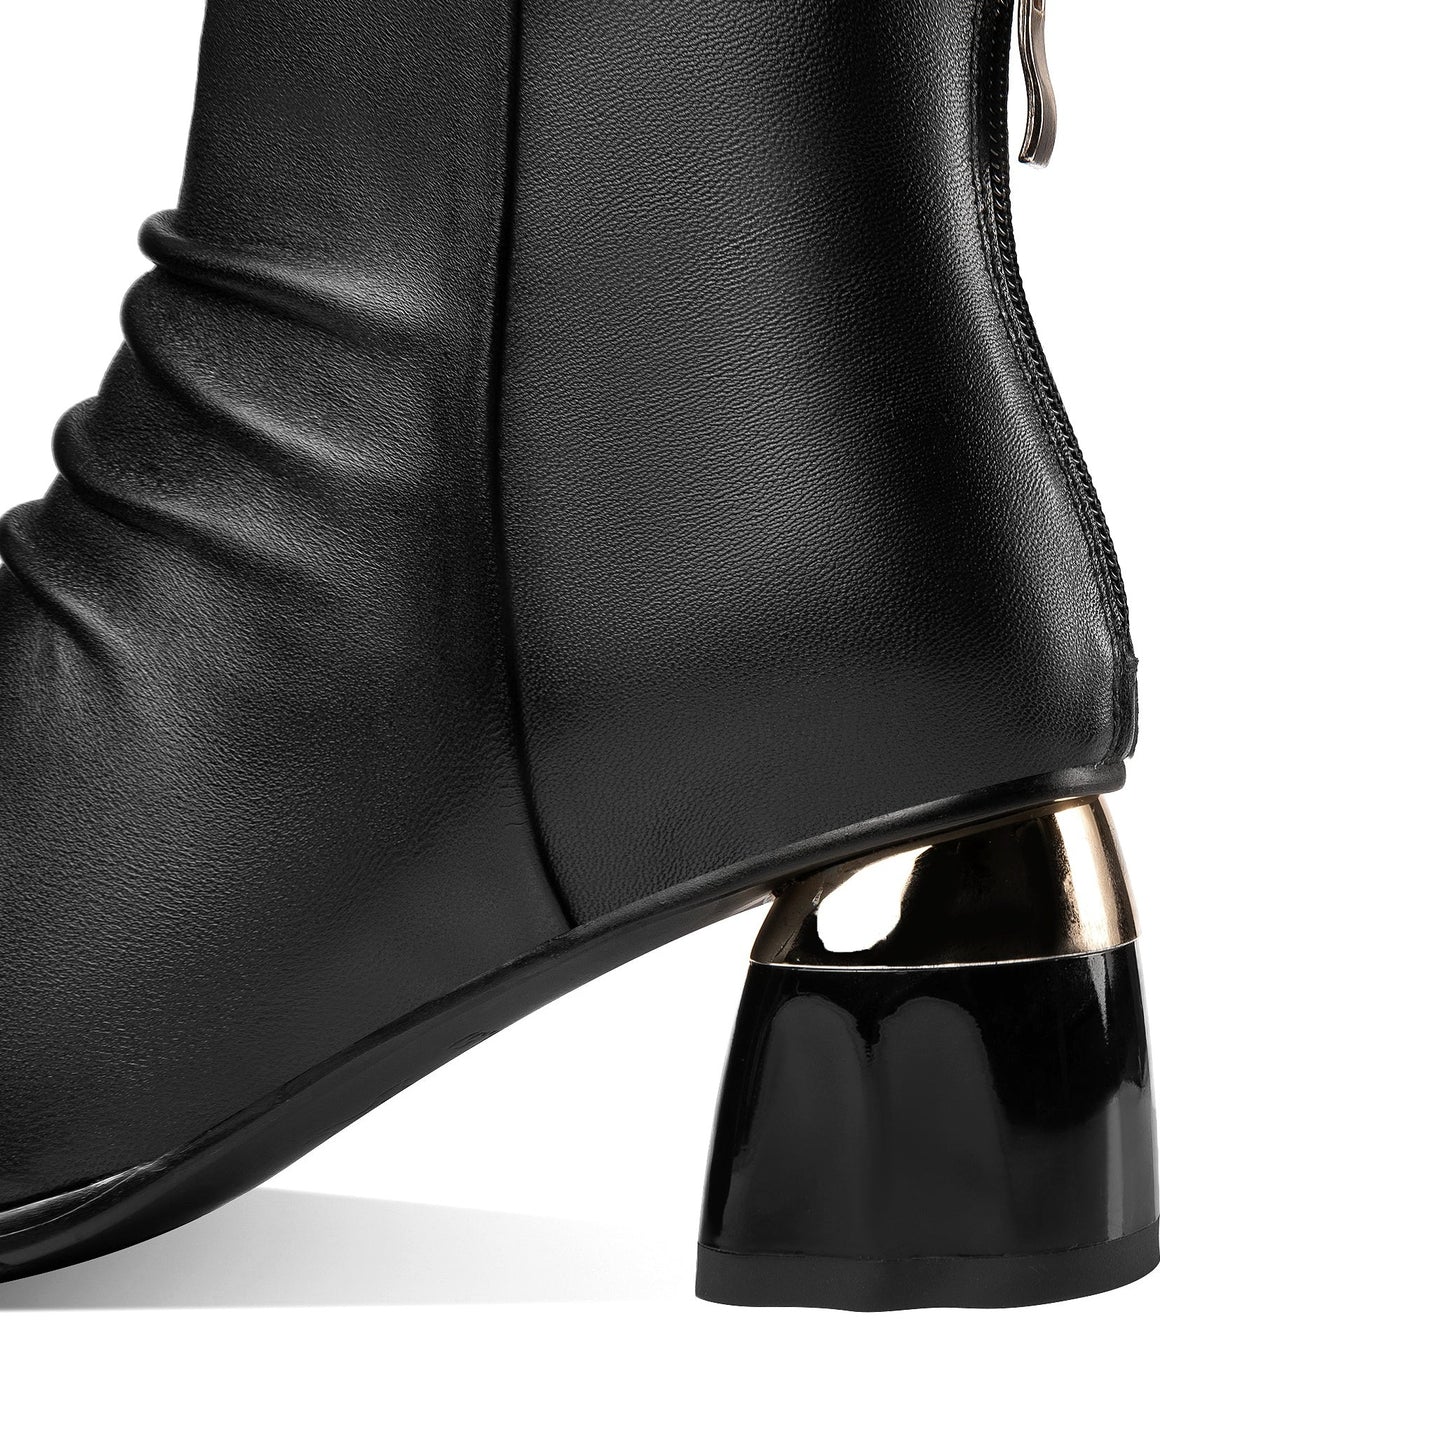 TinaCus Women's Genuine Leather Handmade Block Heel Ankle Boots with Zip Up